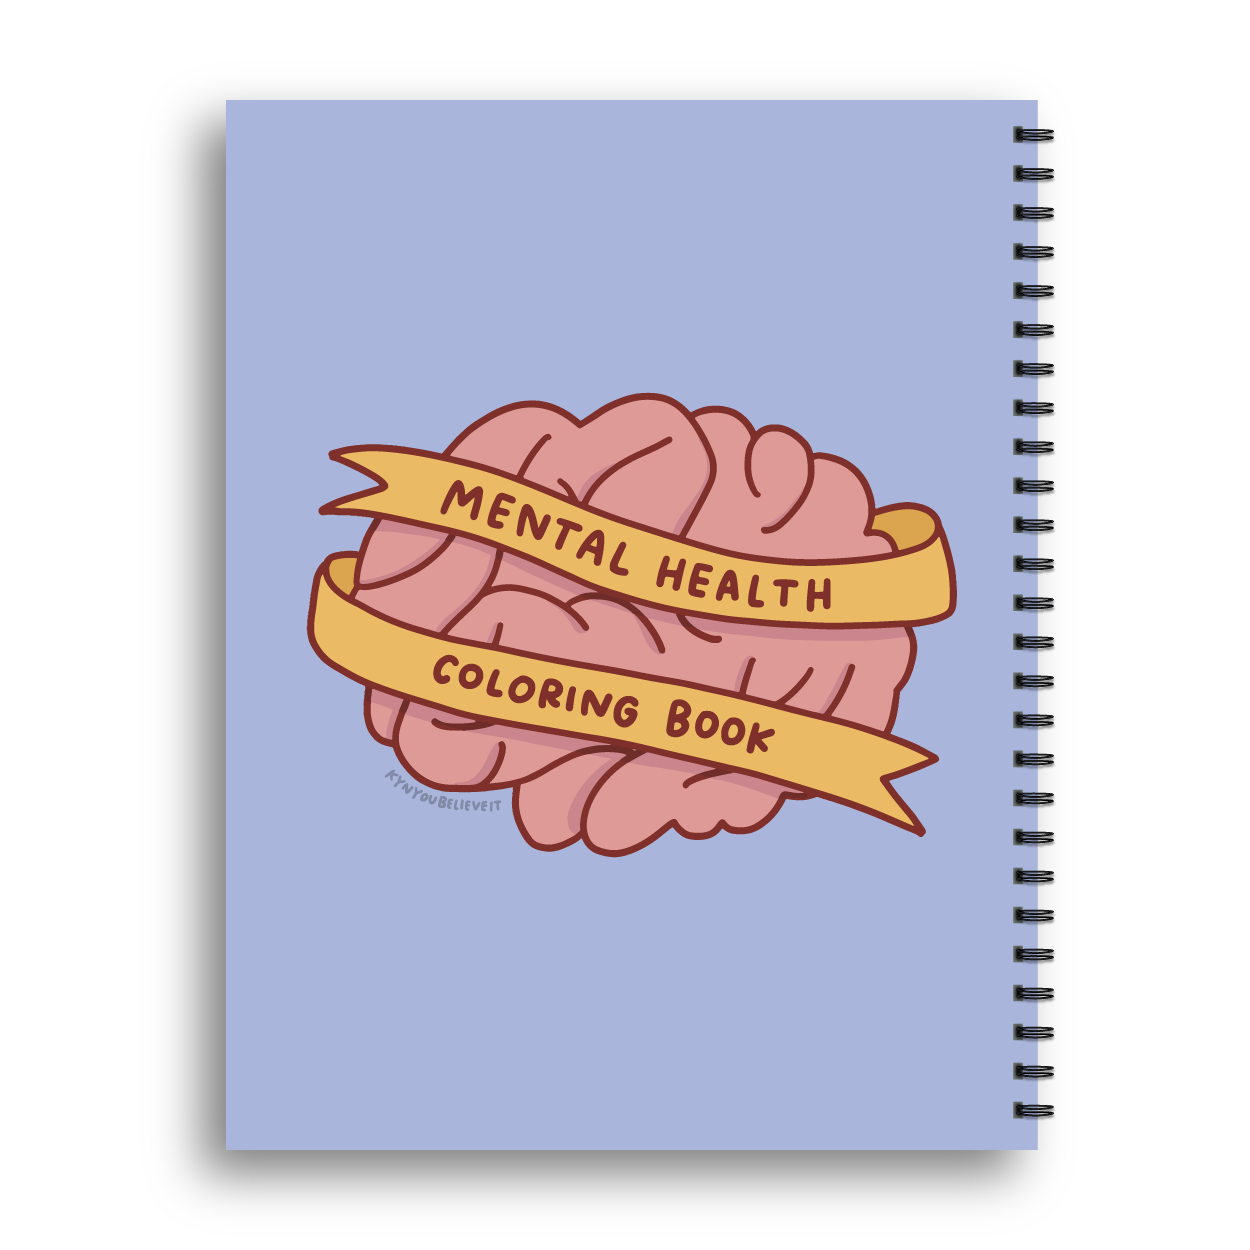 Mental Health Coloring Book (Spiral Bound)